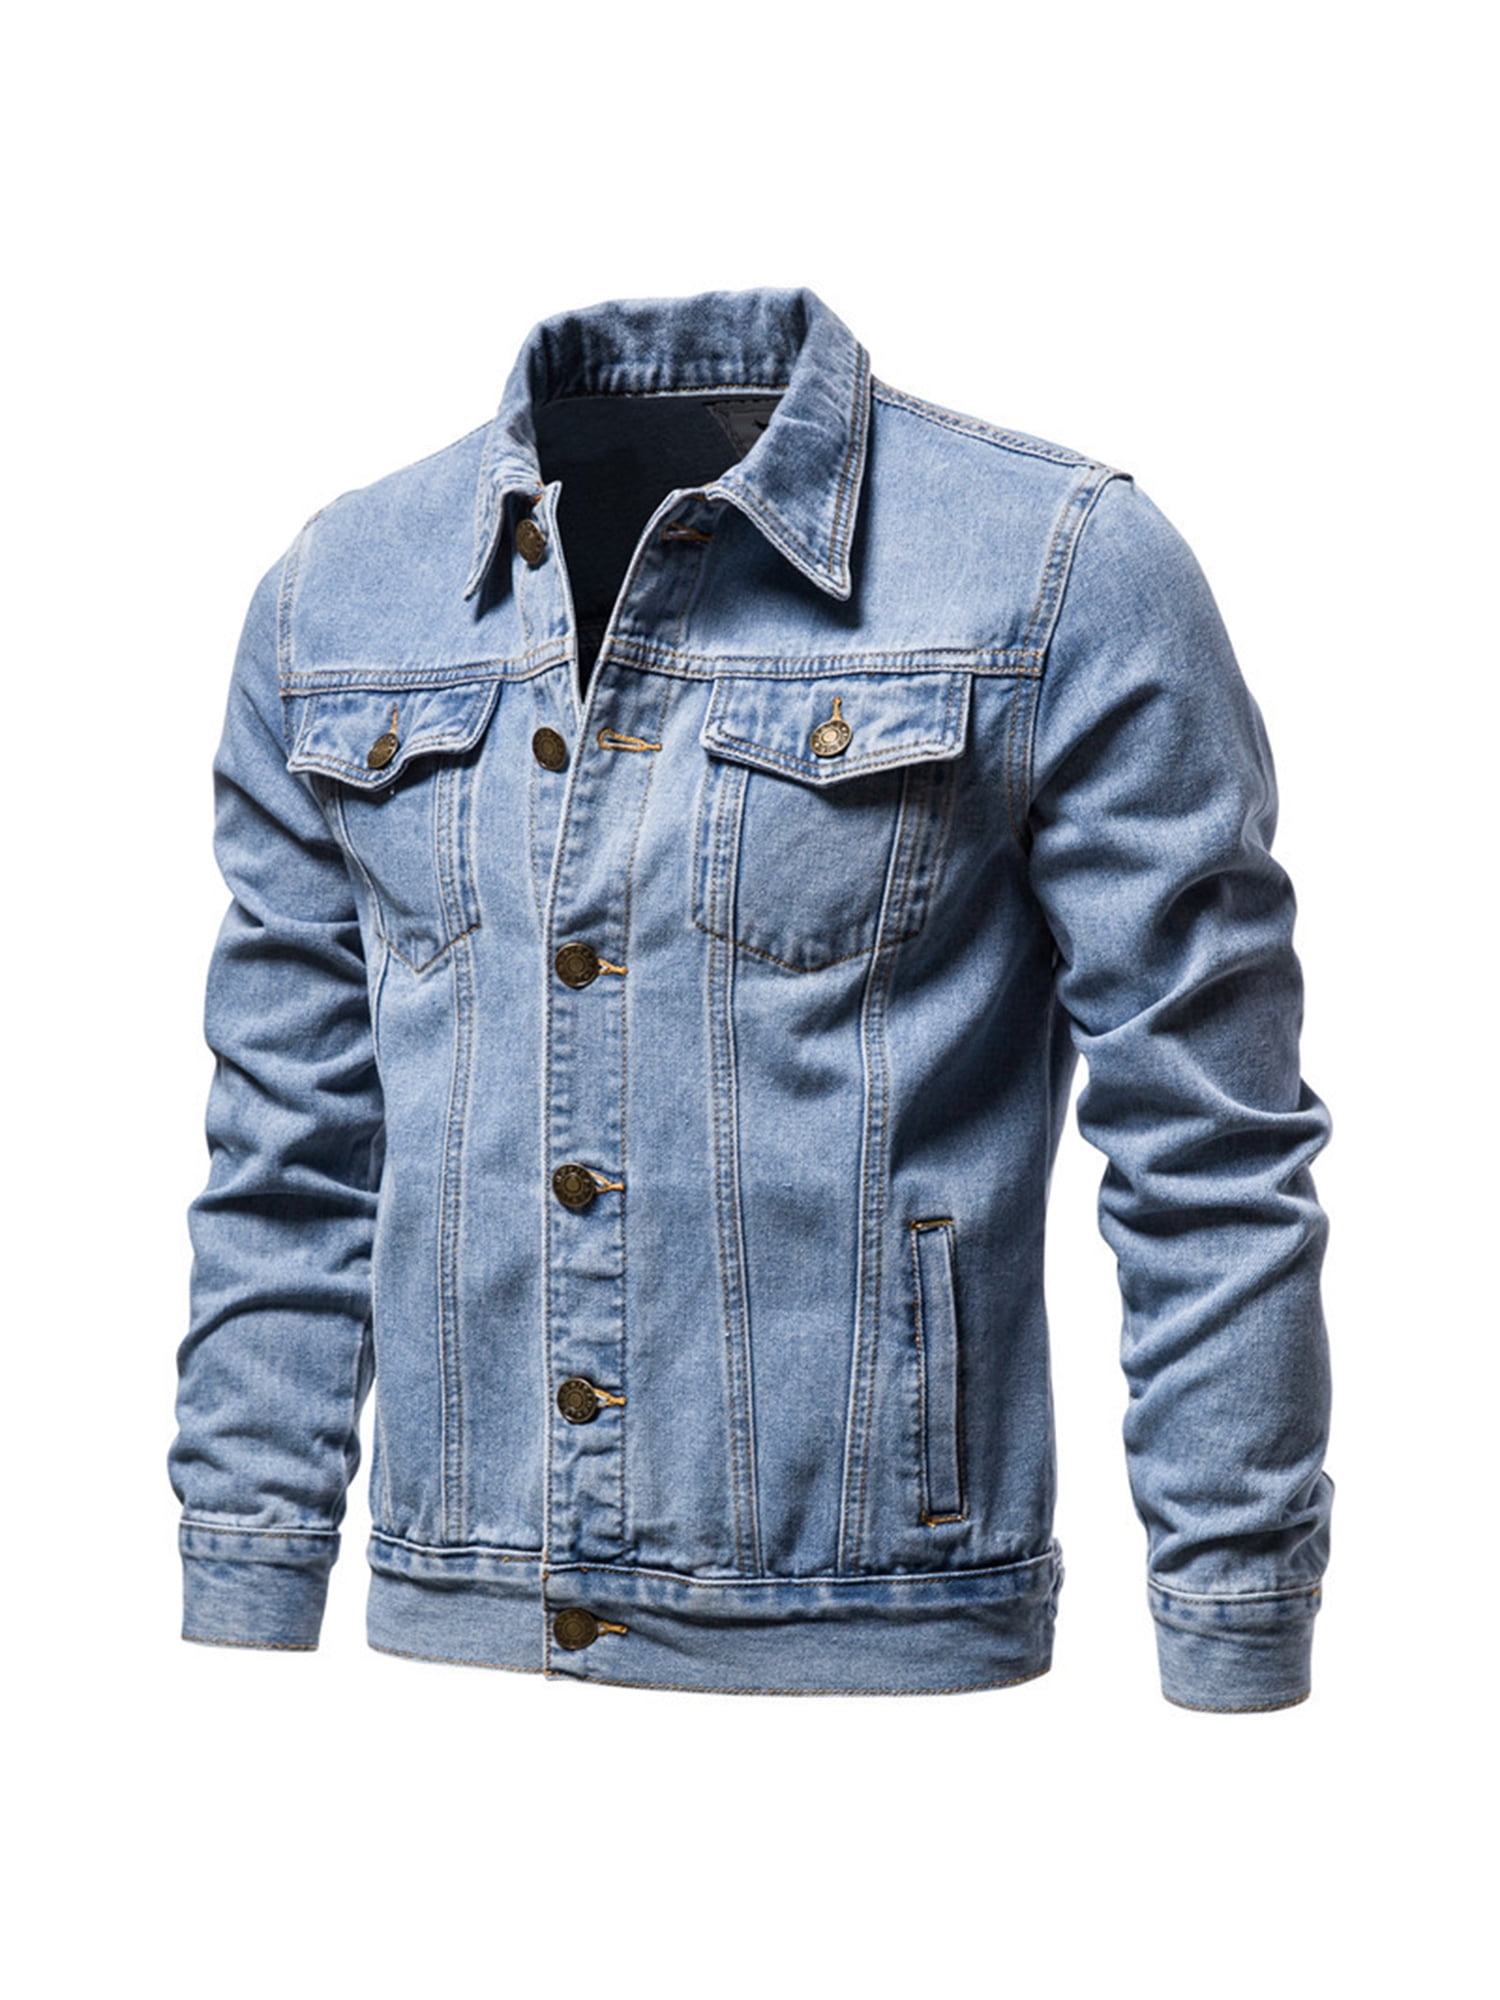 kpoplk Men's Casual Lightweight Long Sleeves Denim Jacket Casual Long  Sleeve Slim Fit Outwear Solid Tops Light Blue,XL 